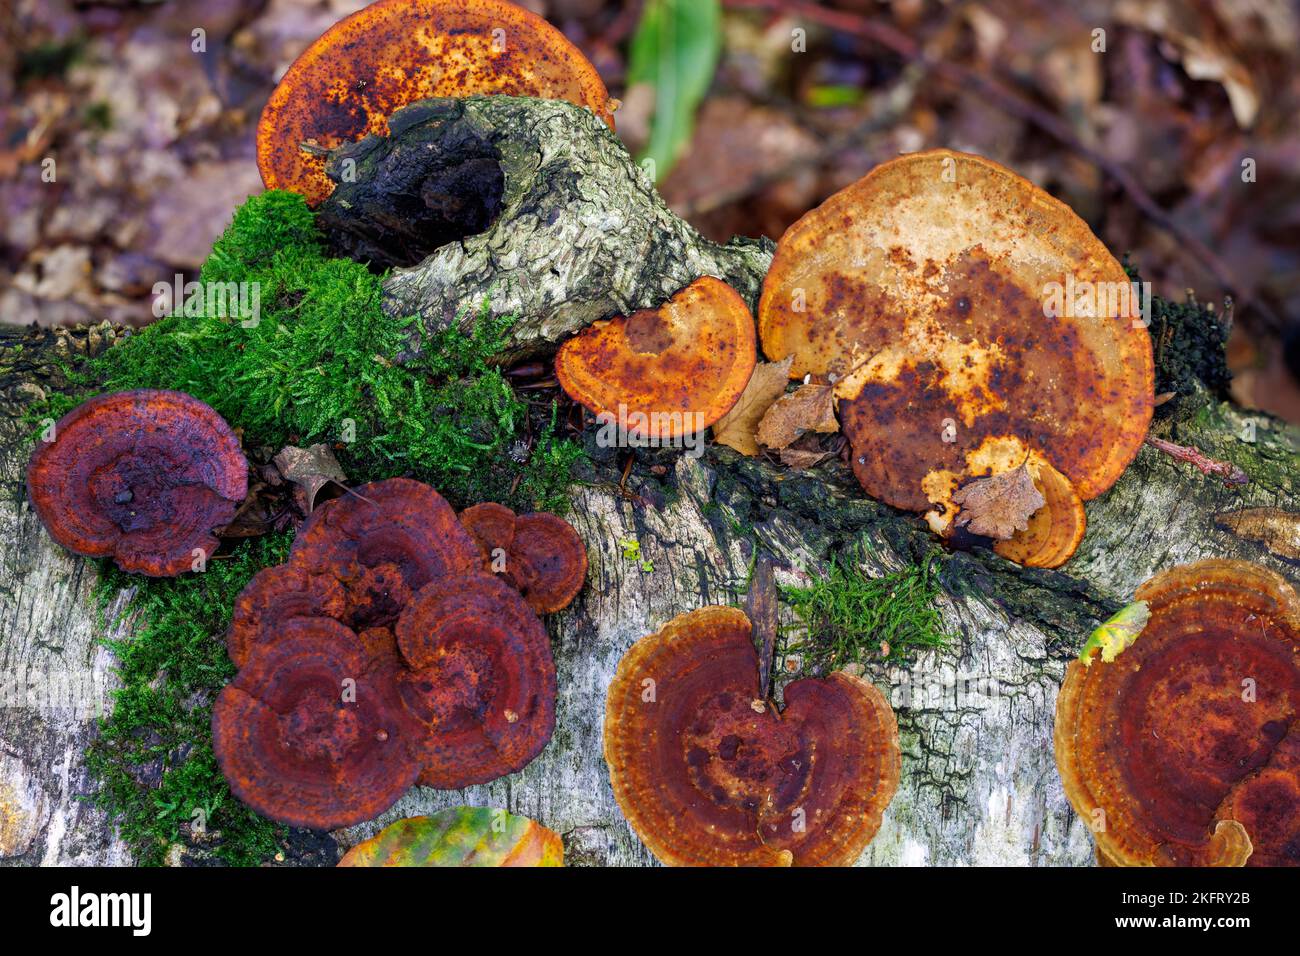 Mushroom community on birch trunk, Germany, Europe Stock Photo